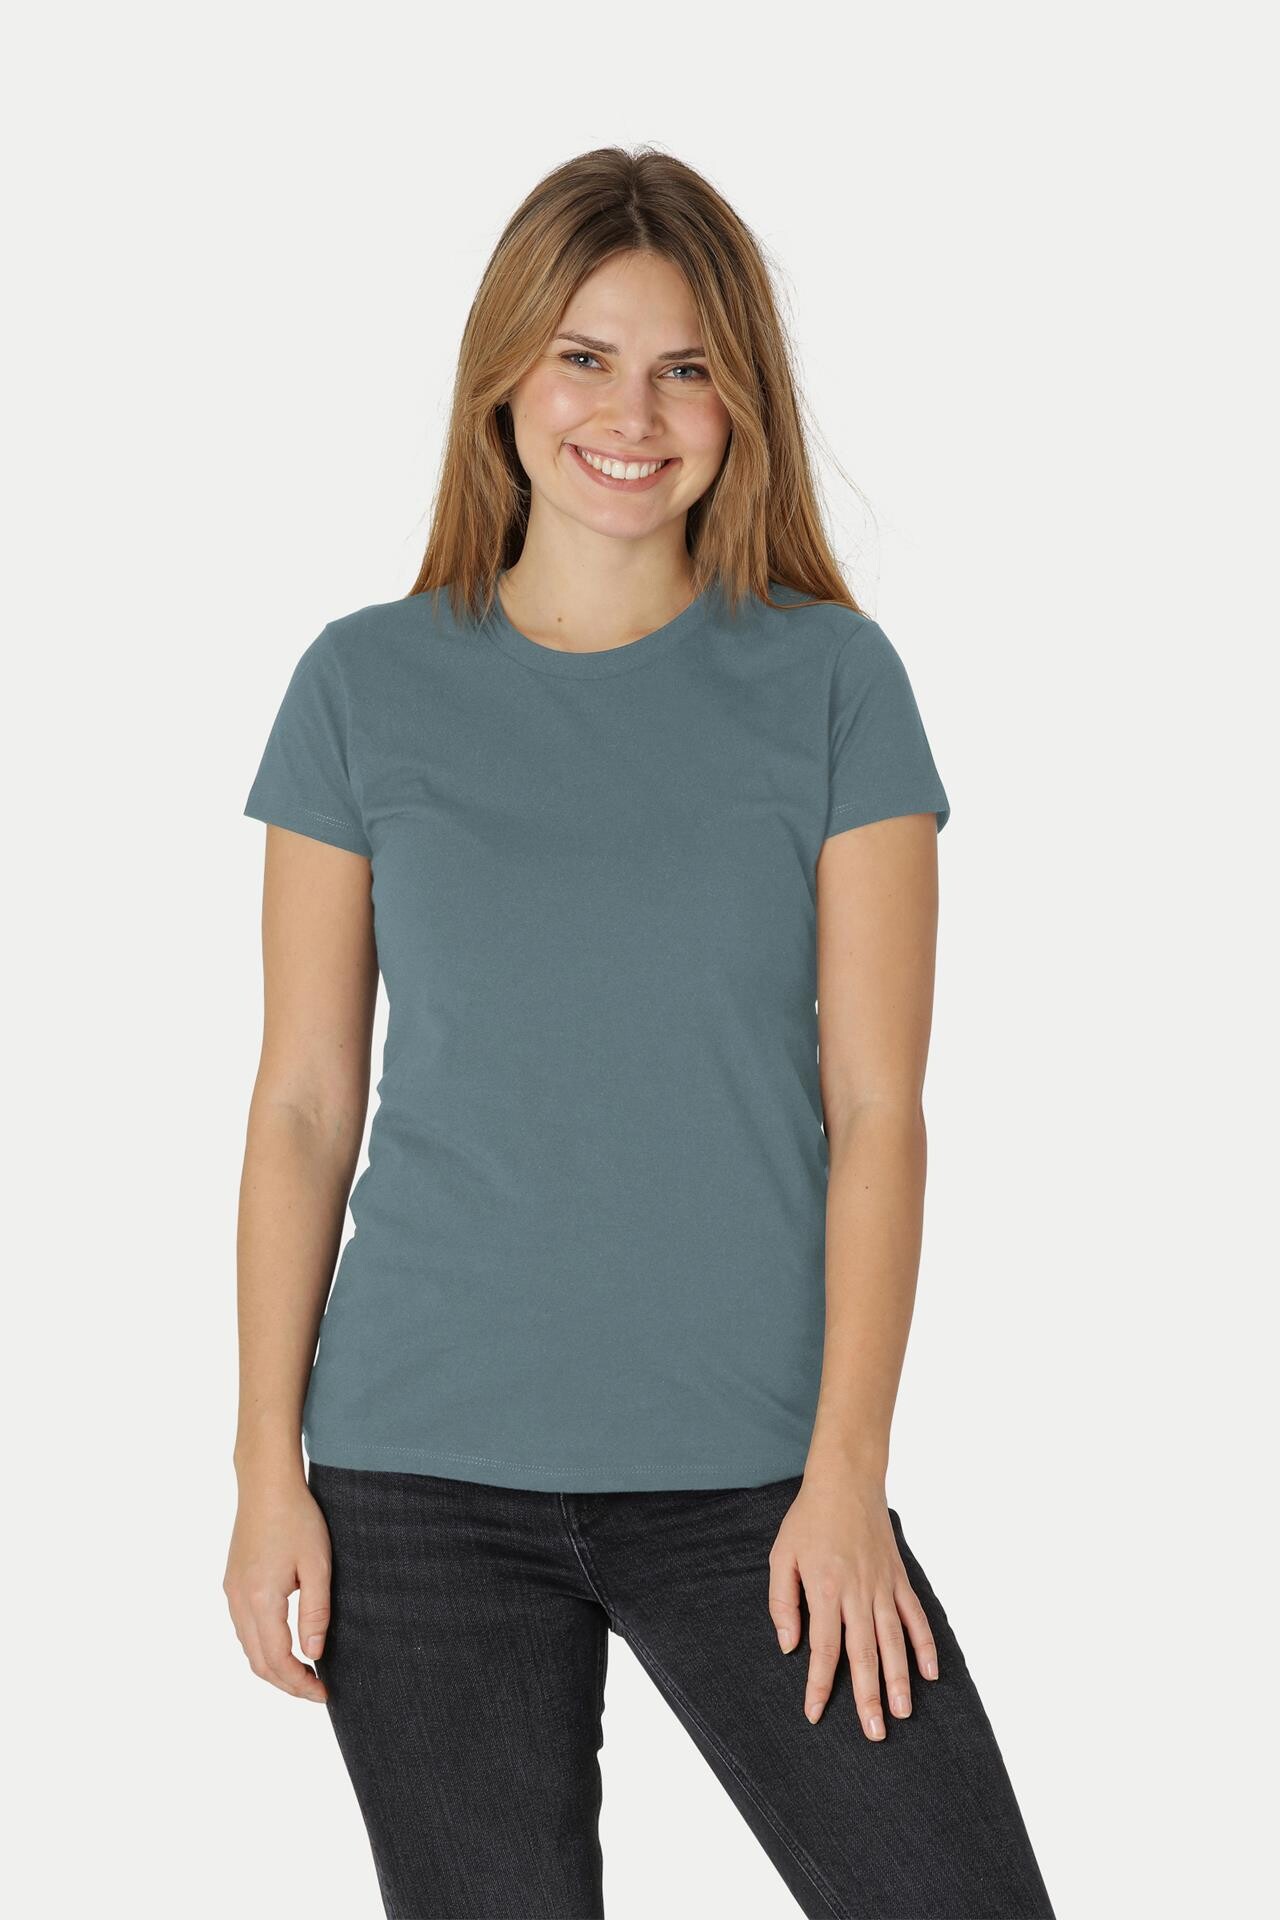 Billede af Neutral Organic - Ladies Fitted T-shirt (Teal, 2XL)